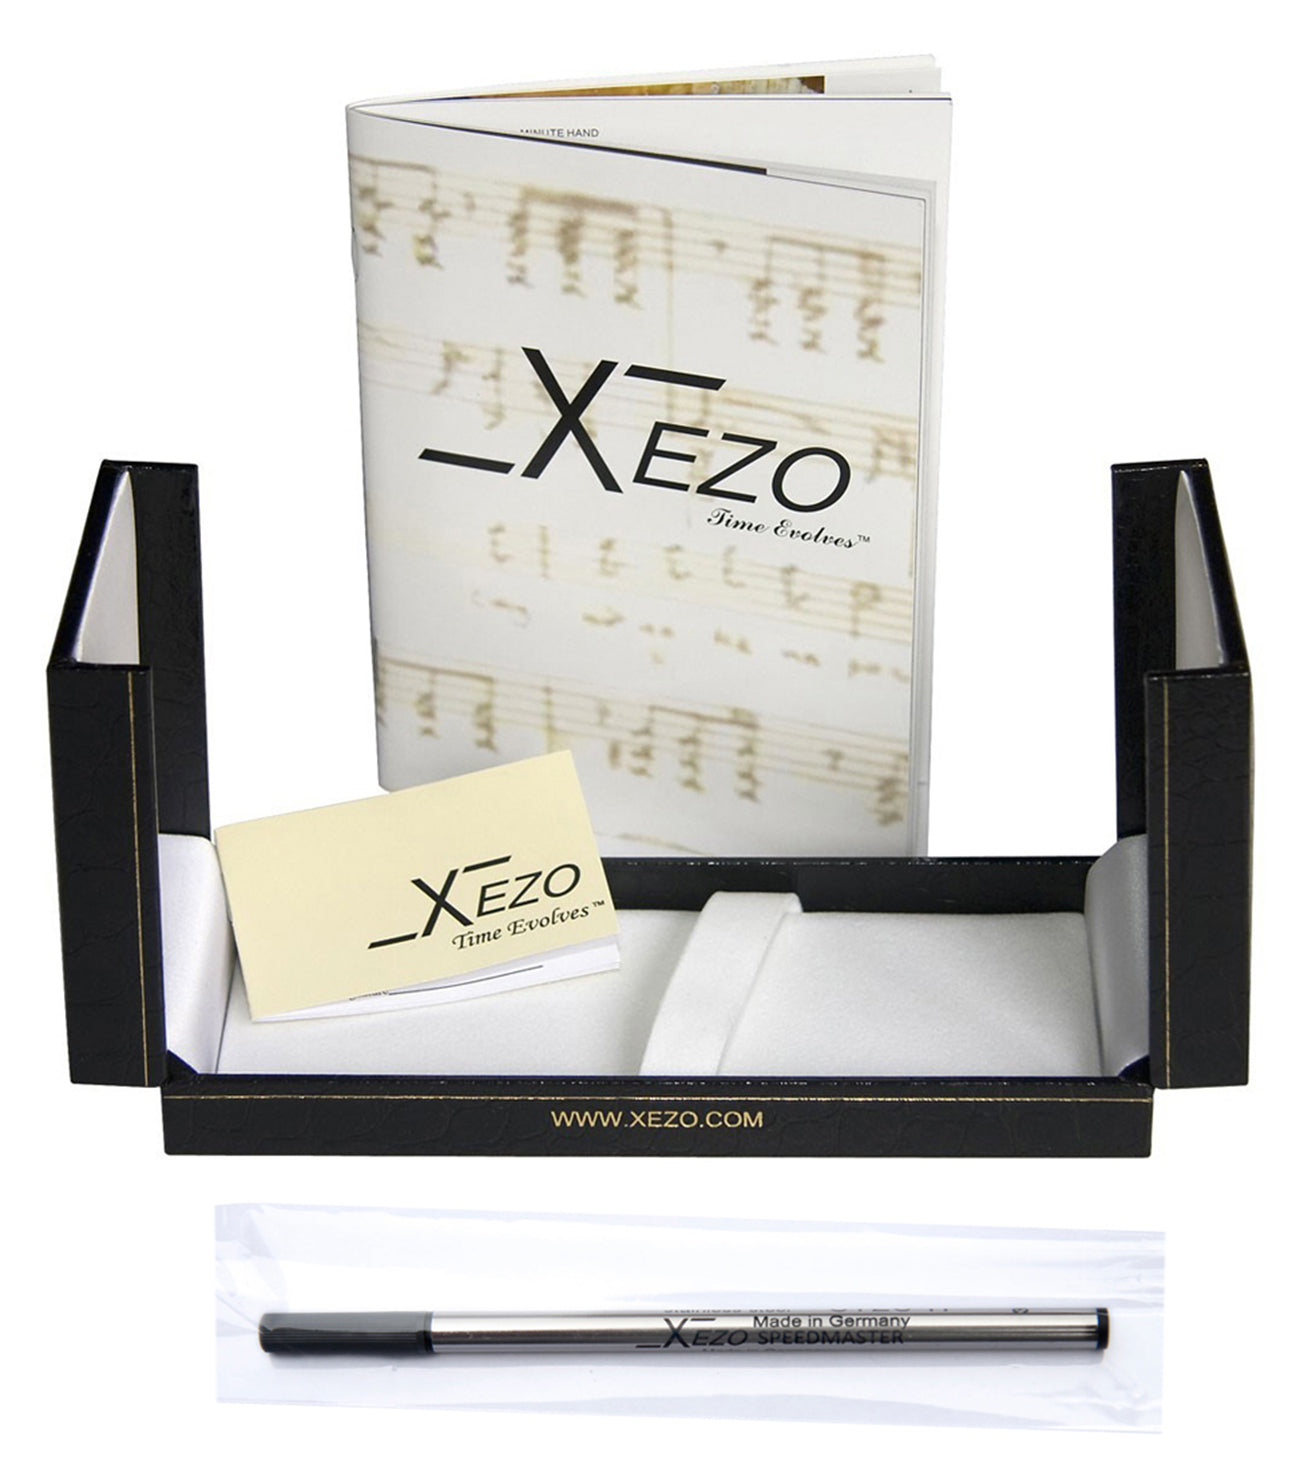 Xezo - Black gift box, certificate, manual, and ink cartridge